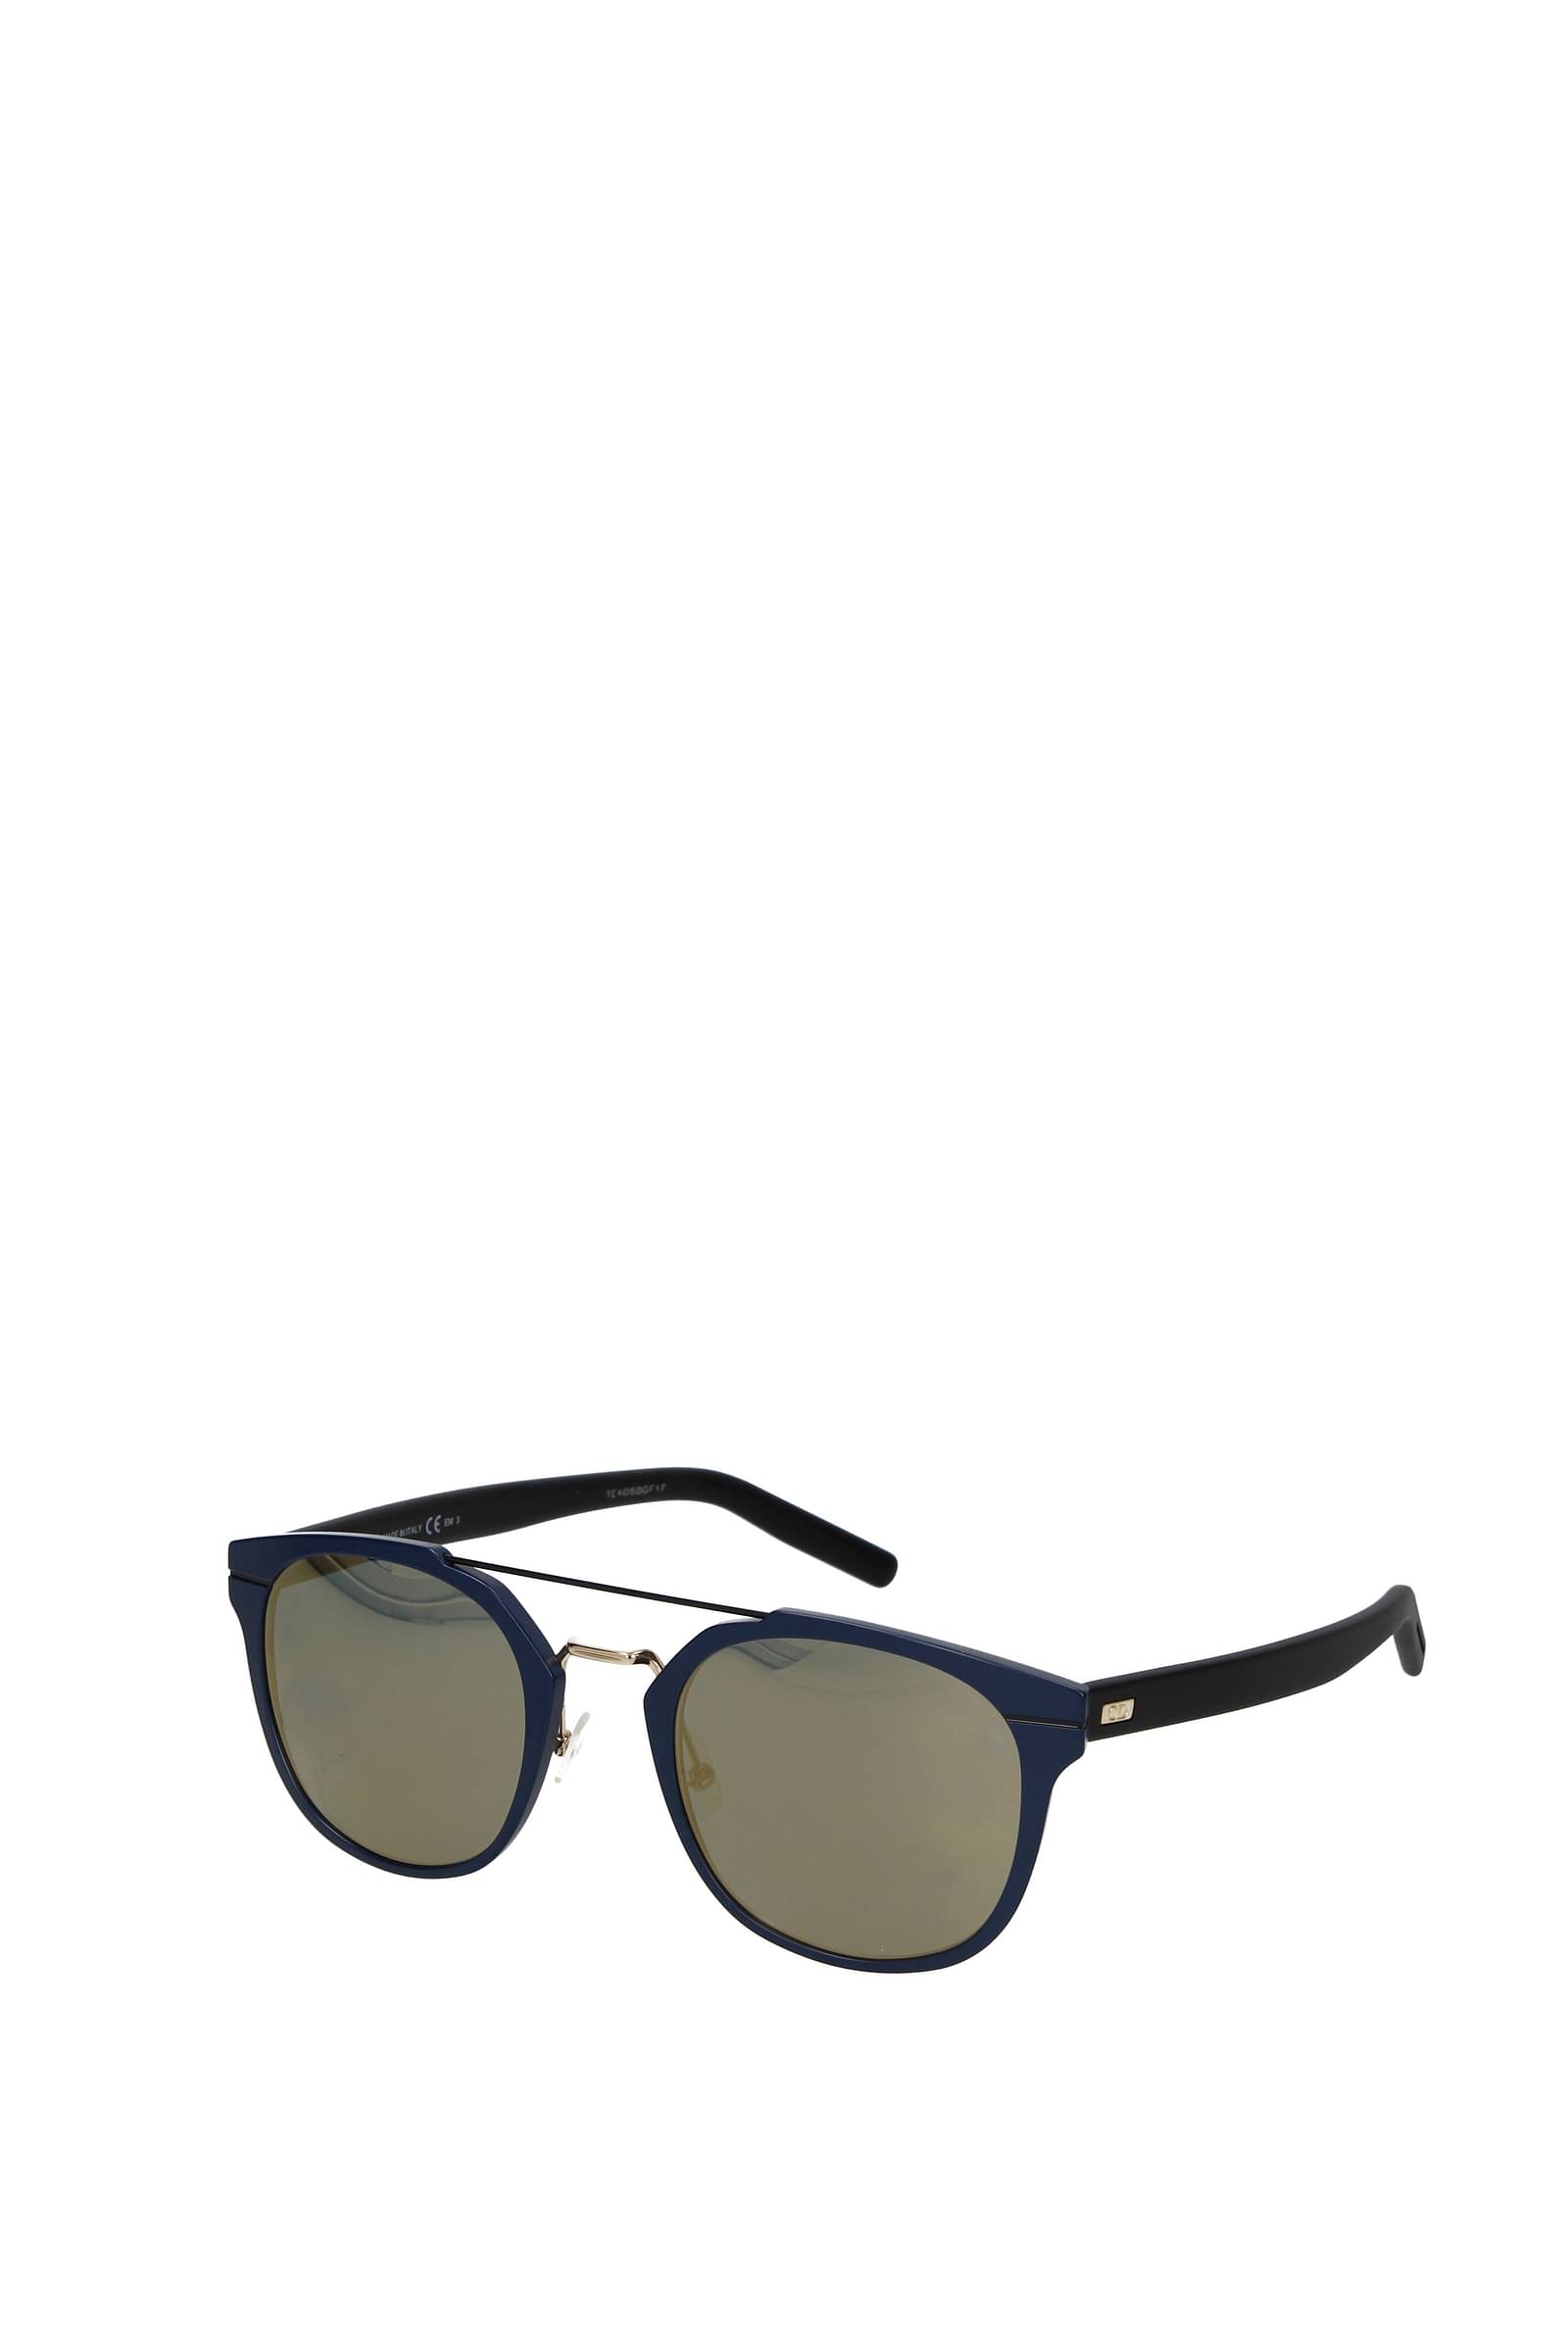 Designer Sunglasses for Women  Aviator Round Square  Cat Eye  DIOR GB